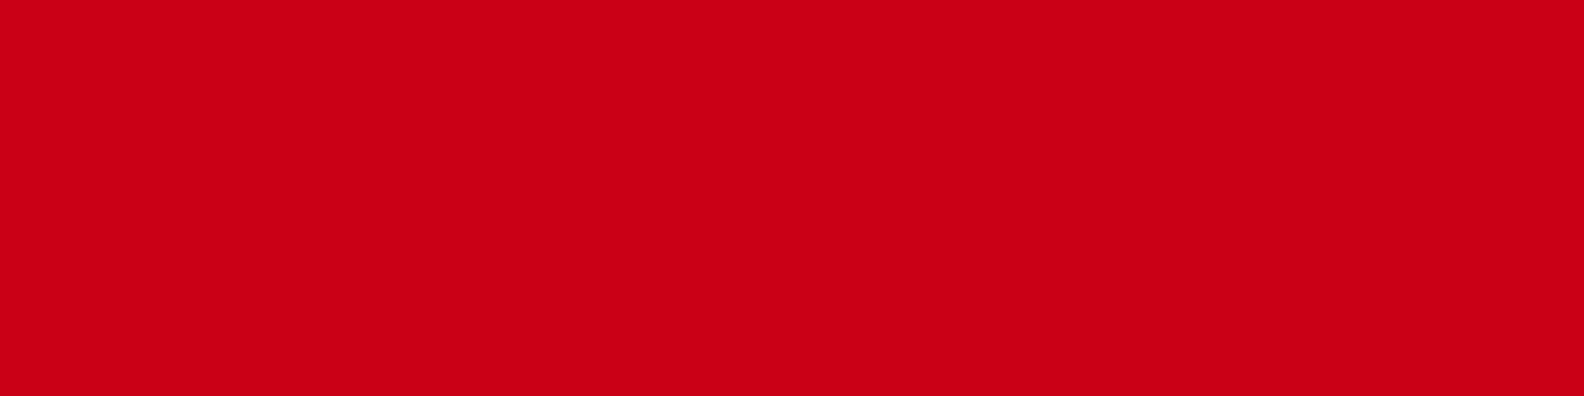 1584x396 Harvard Crimson Solid Color Background